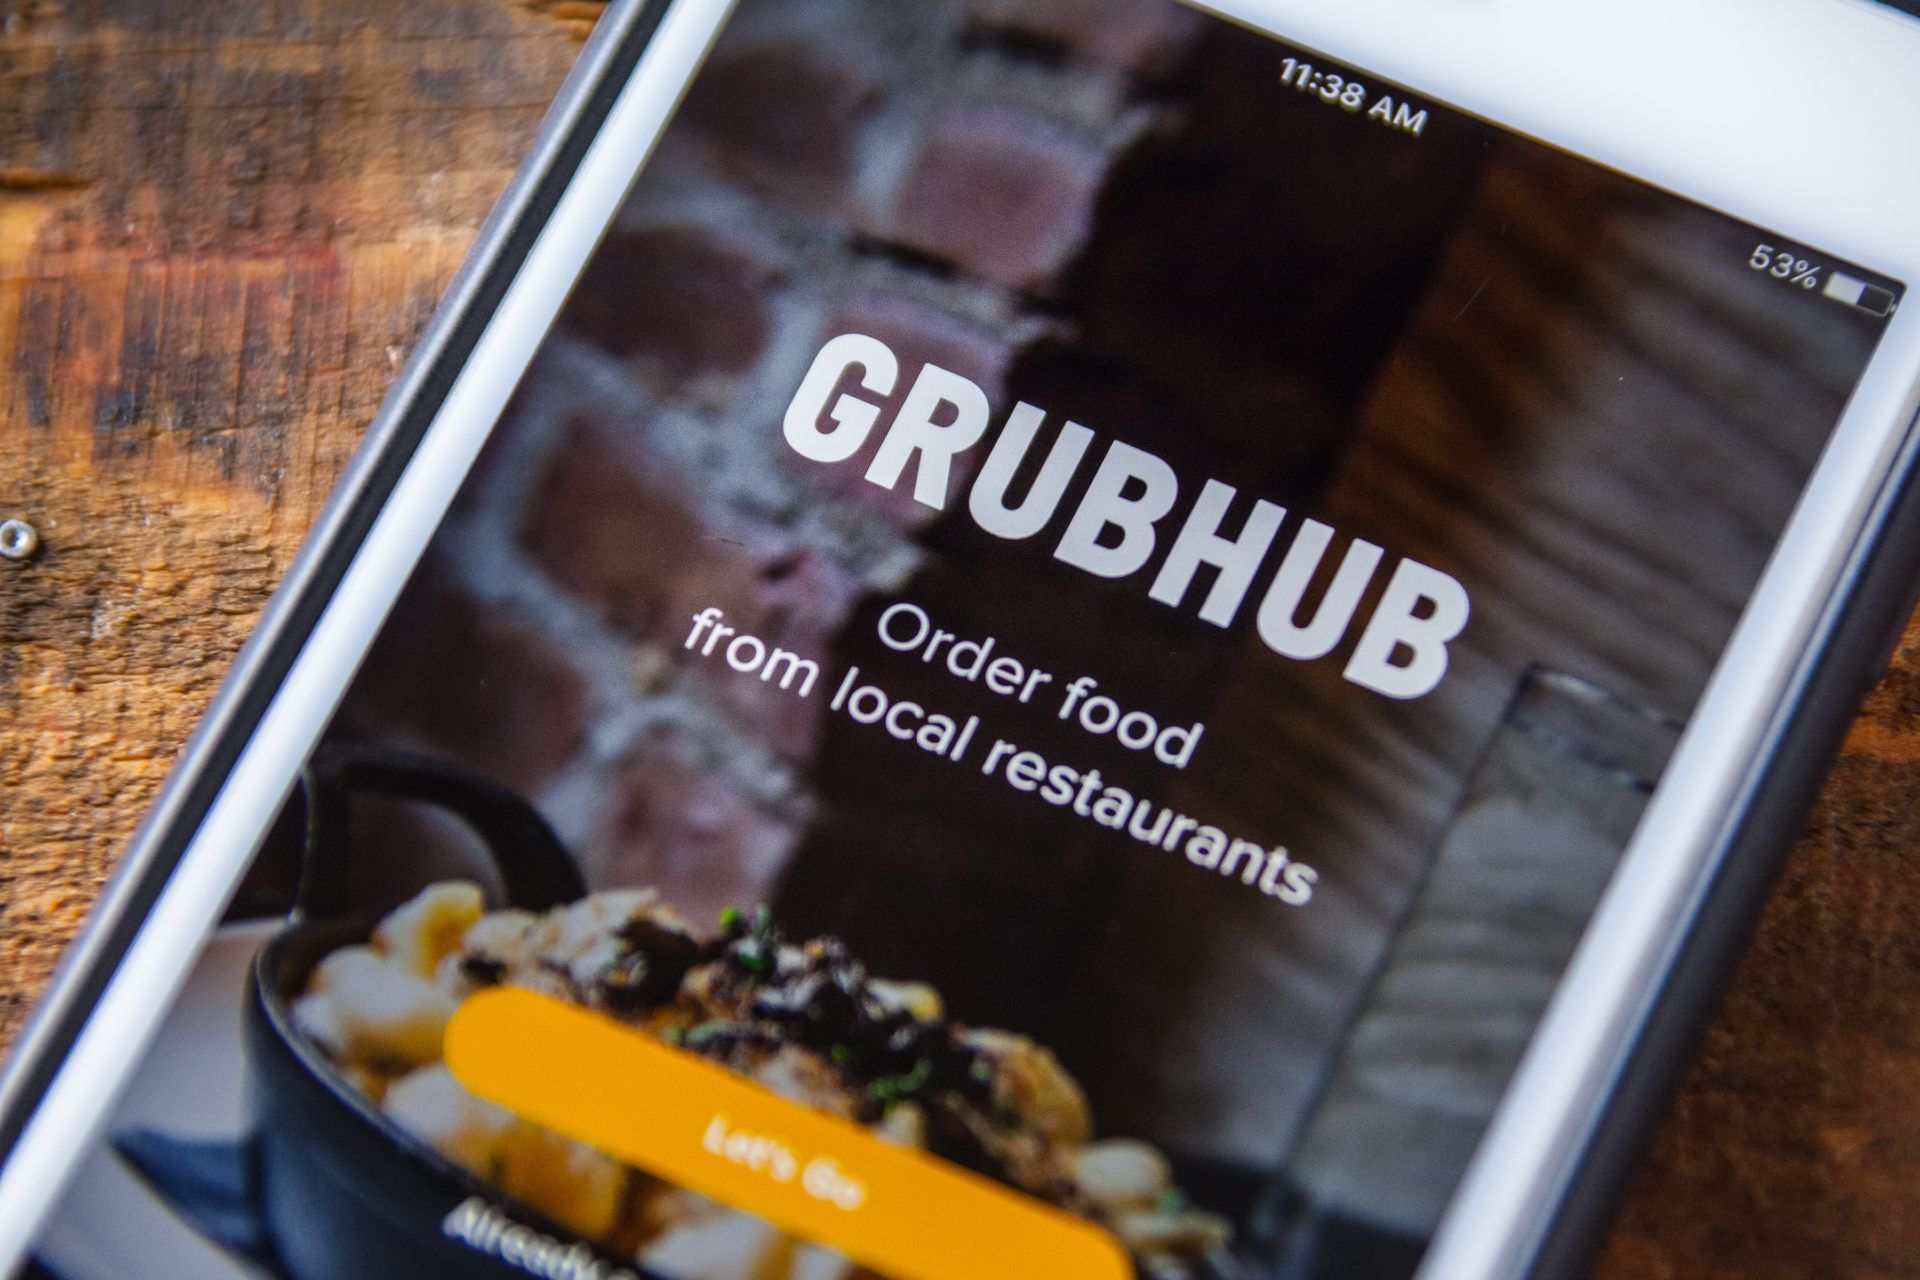 Grubhub app screen on a smartphone - grubhub partner